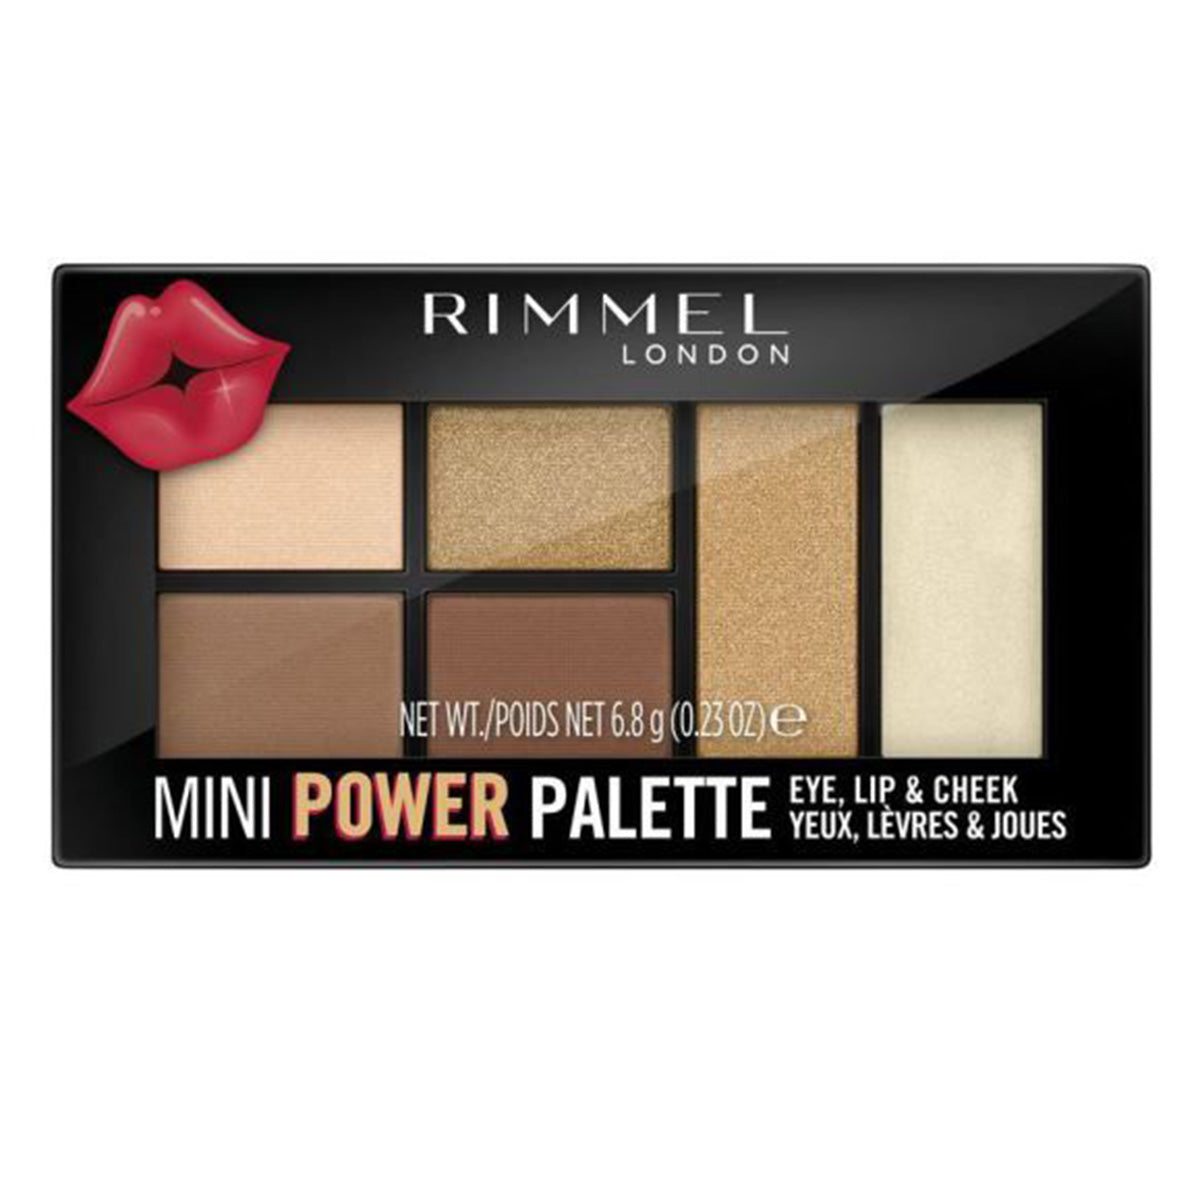 Rimmel London - Mini Power Palette - 002 Sassy